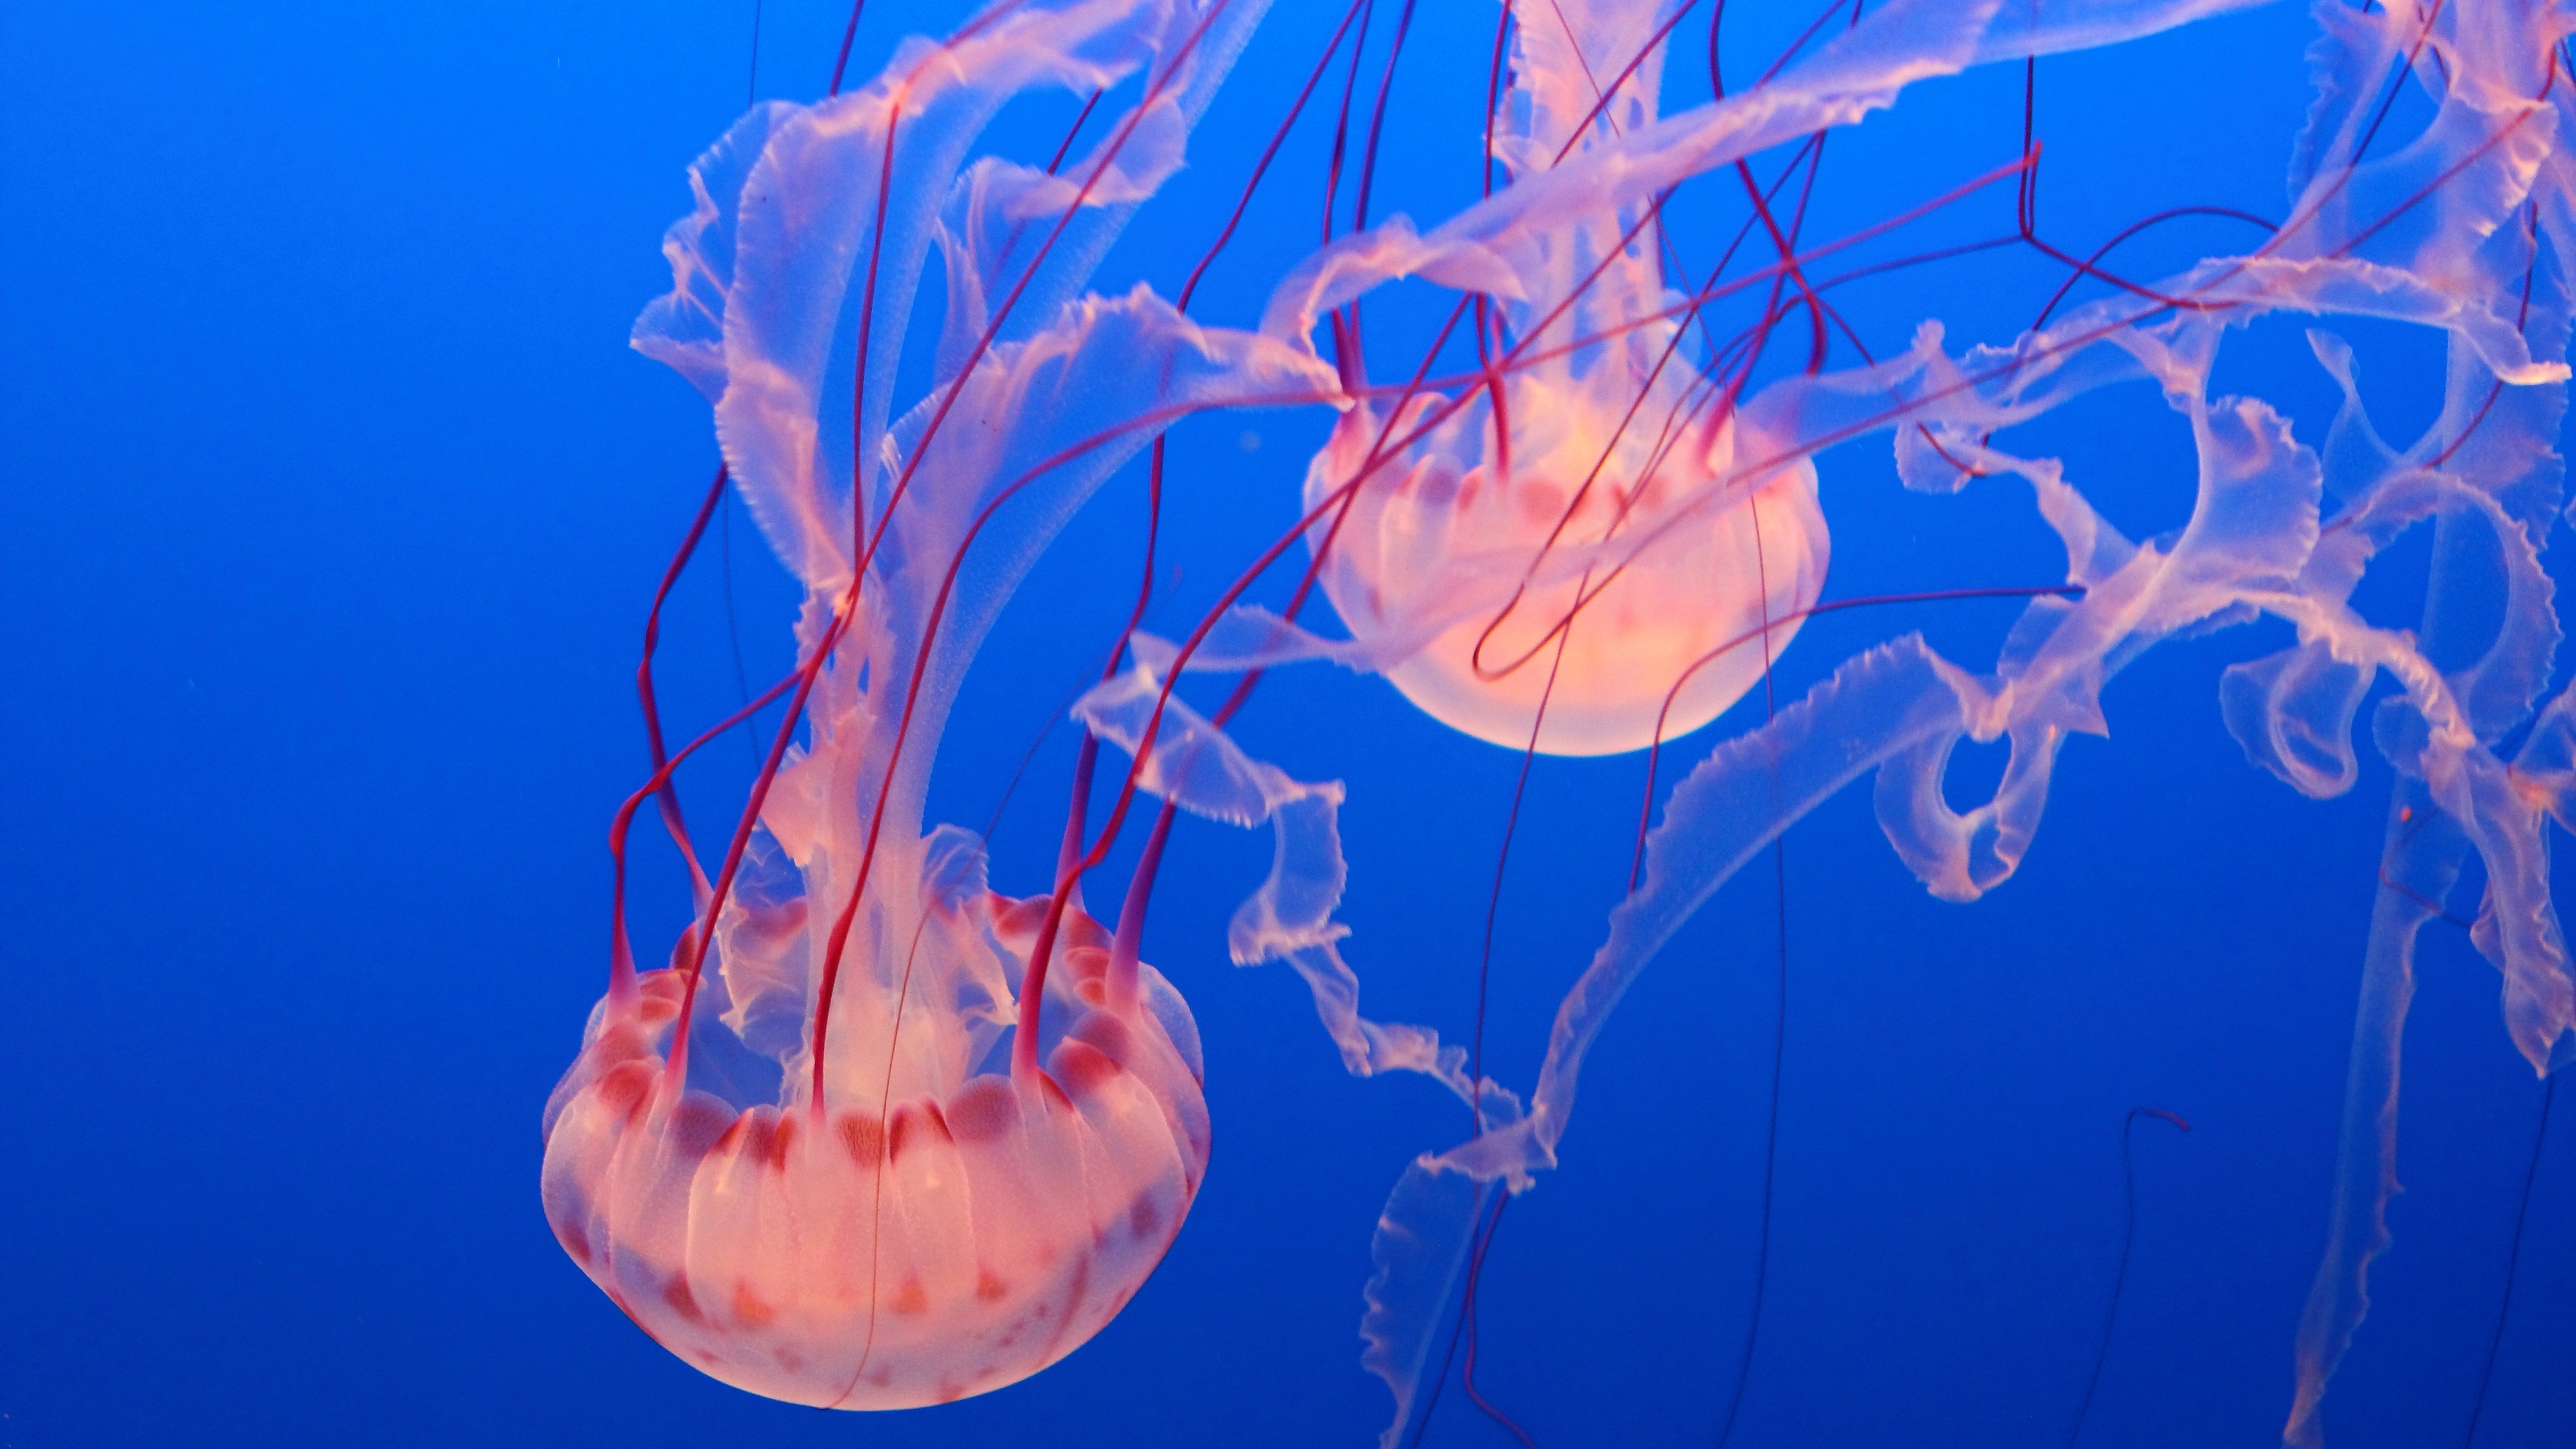 Oceanarium Other, Elegant jellyfish, Underwater tranquility, Oceanic serenity, 3840x2160 4K Desktop